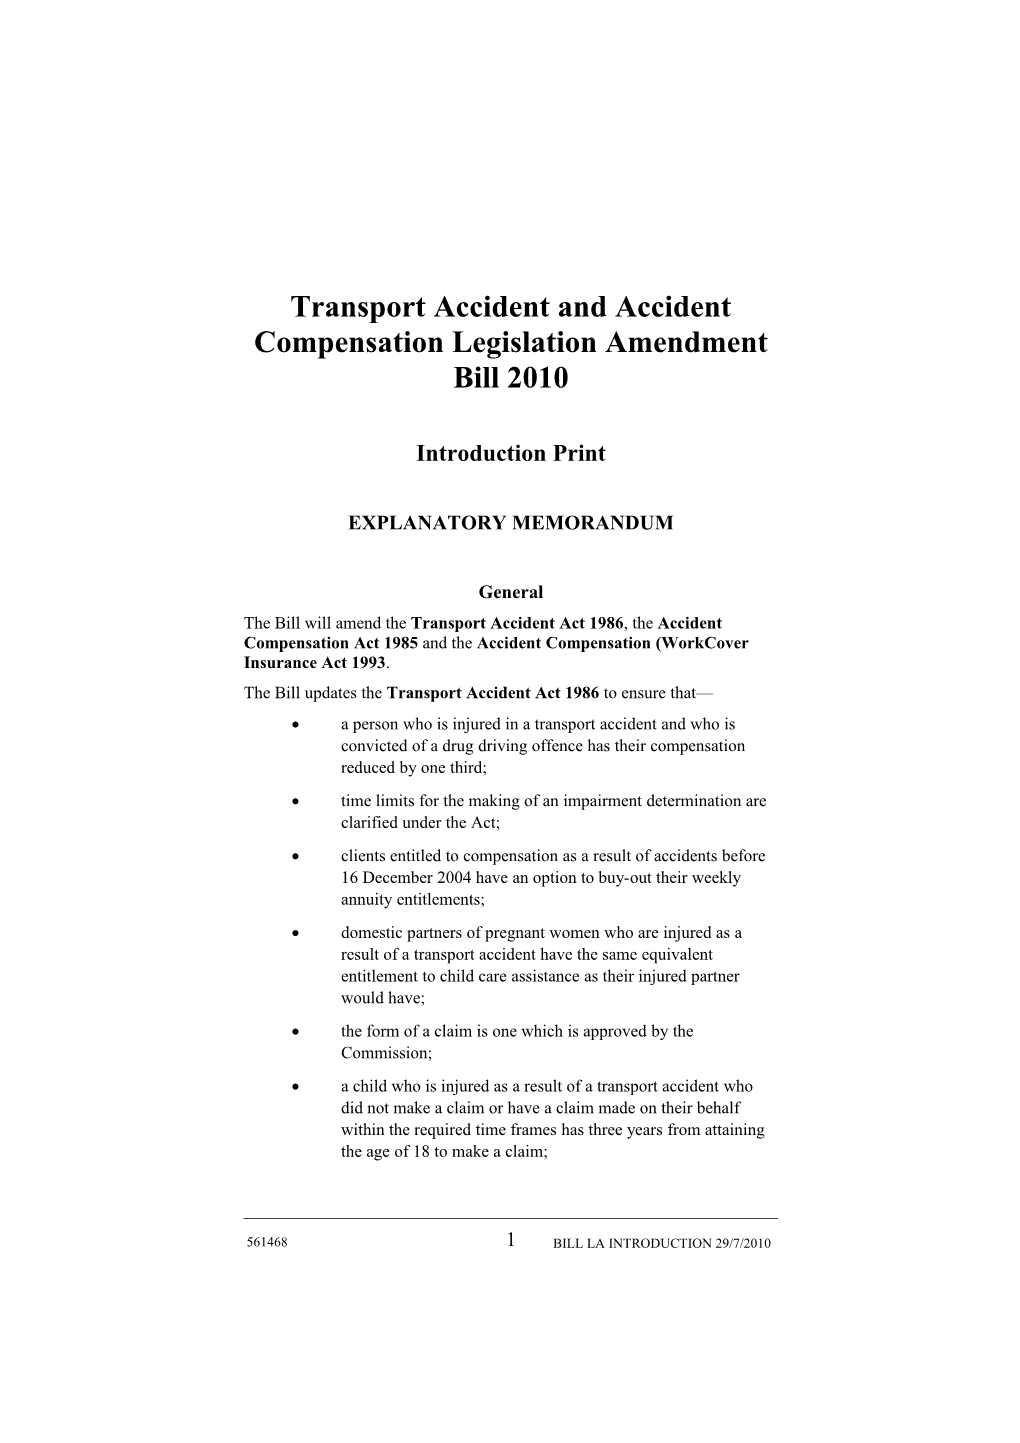 Transport Accident and Accident Compensation Legislation Amendment Bill 2010